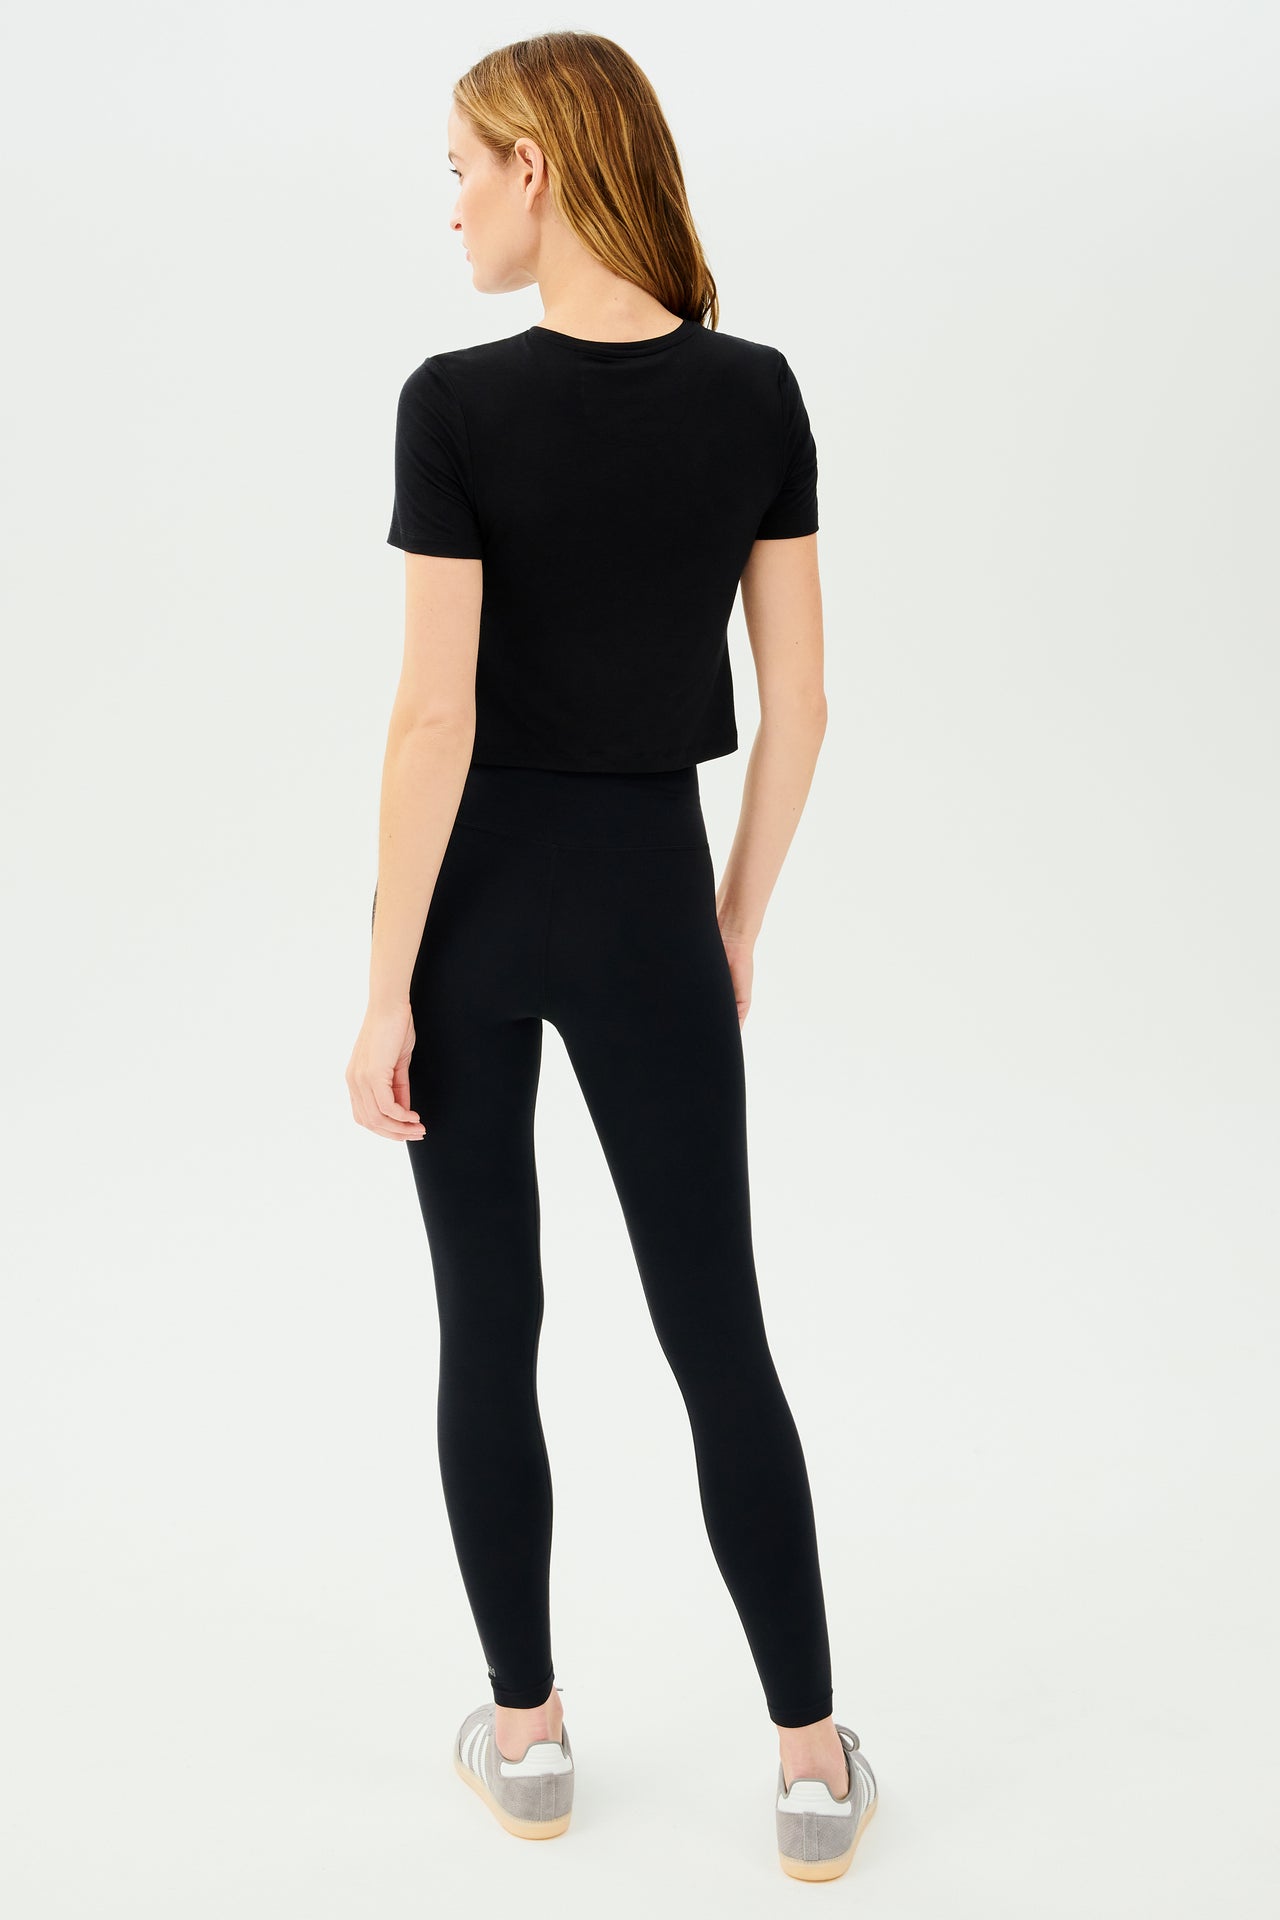 The back view of a woman wearing SPLITS59 Daisy Jersey Tee - Black leggings.